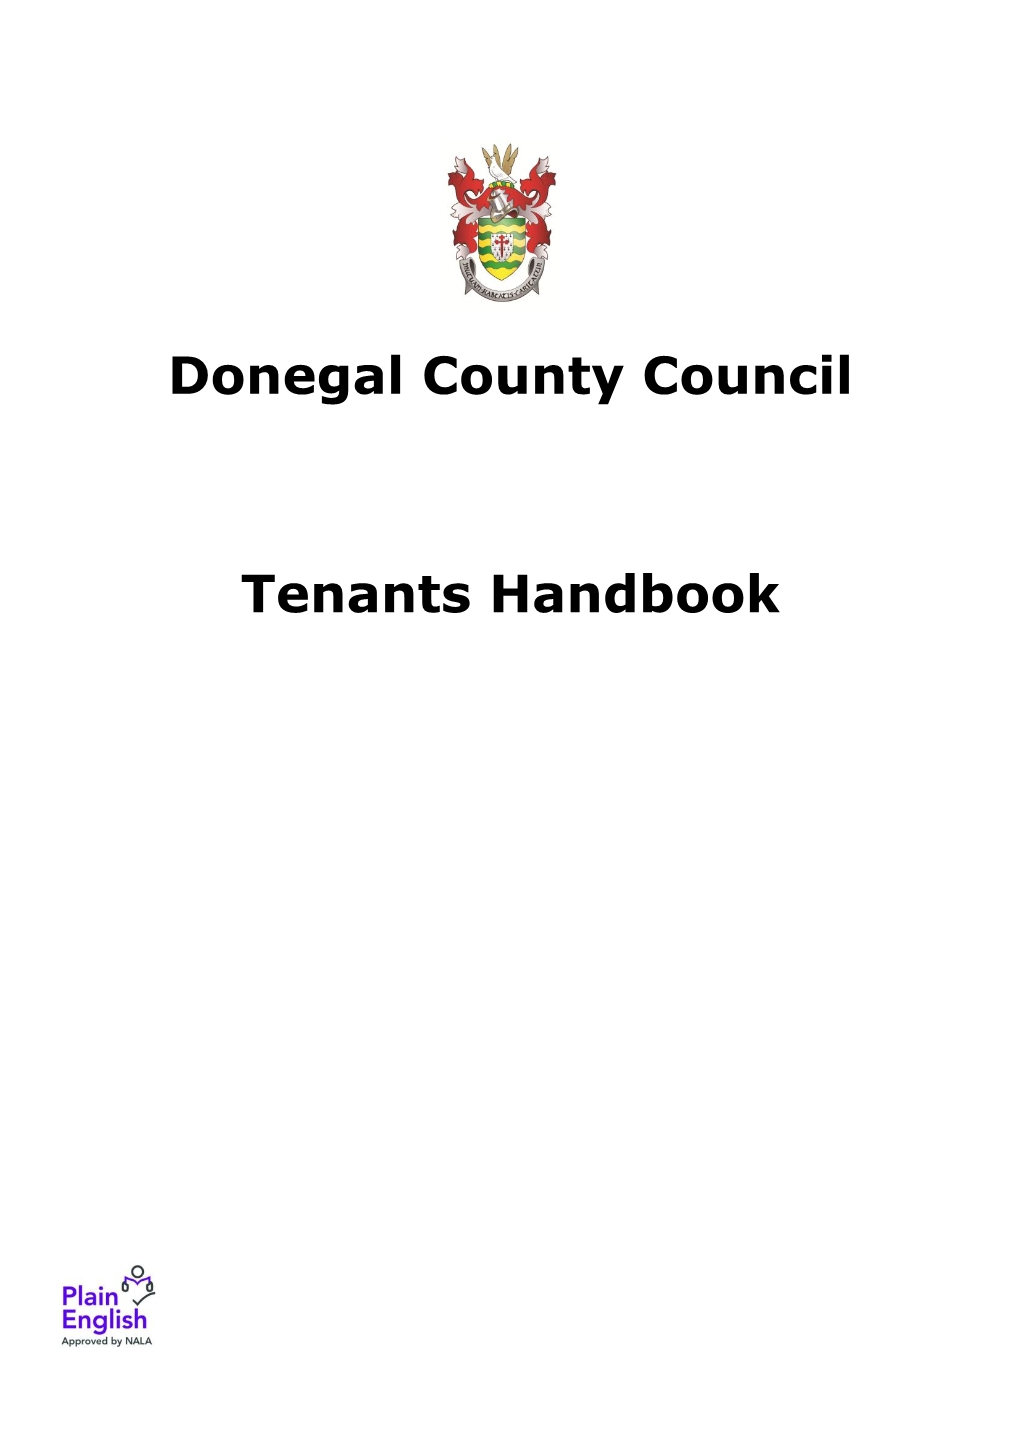 Donegal County Council Tenants Handbook